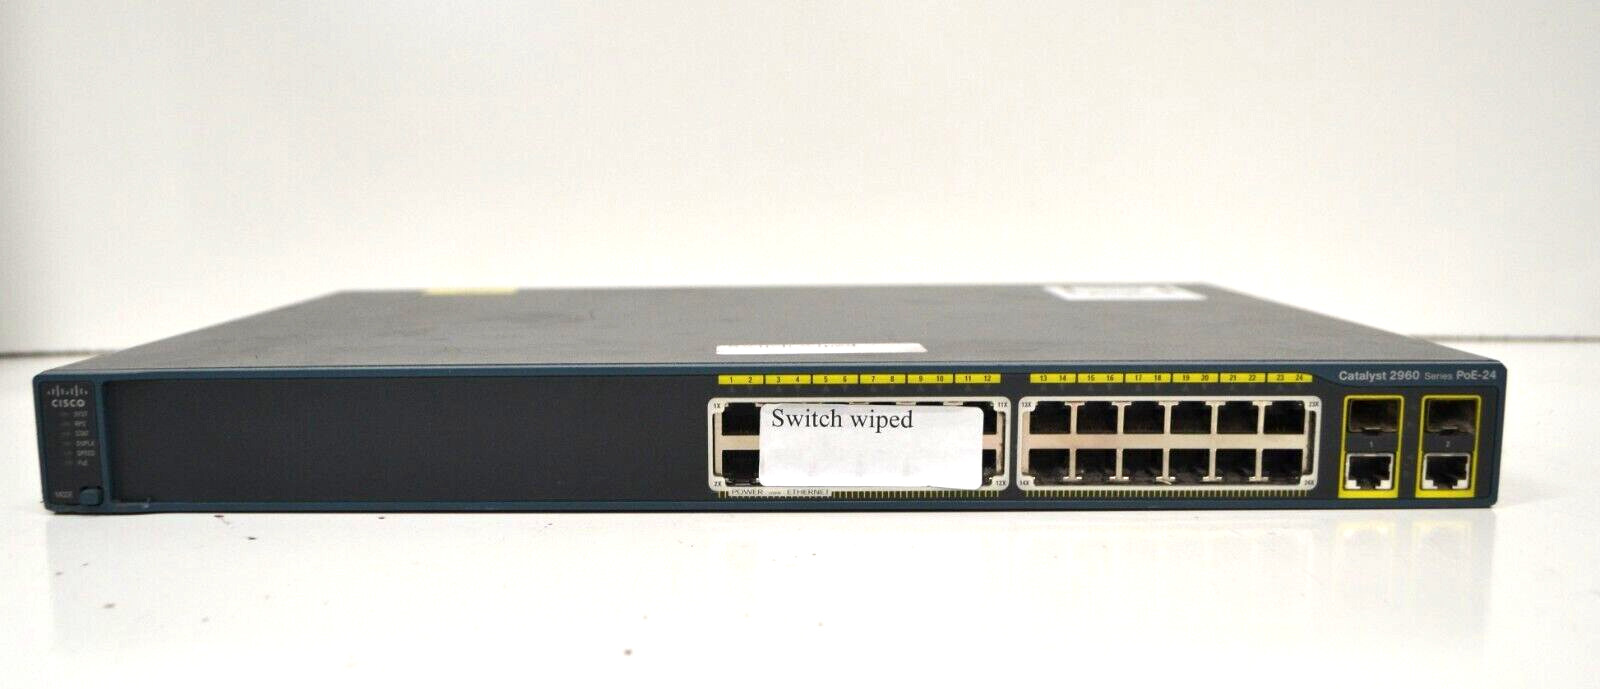 Cisco WS-C2960-24PC-L 24 Port POE Switch Dual Gigabit